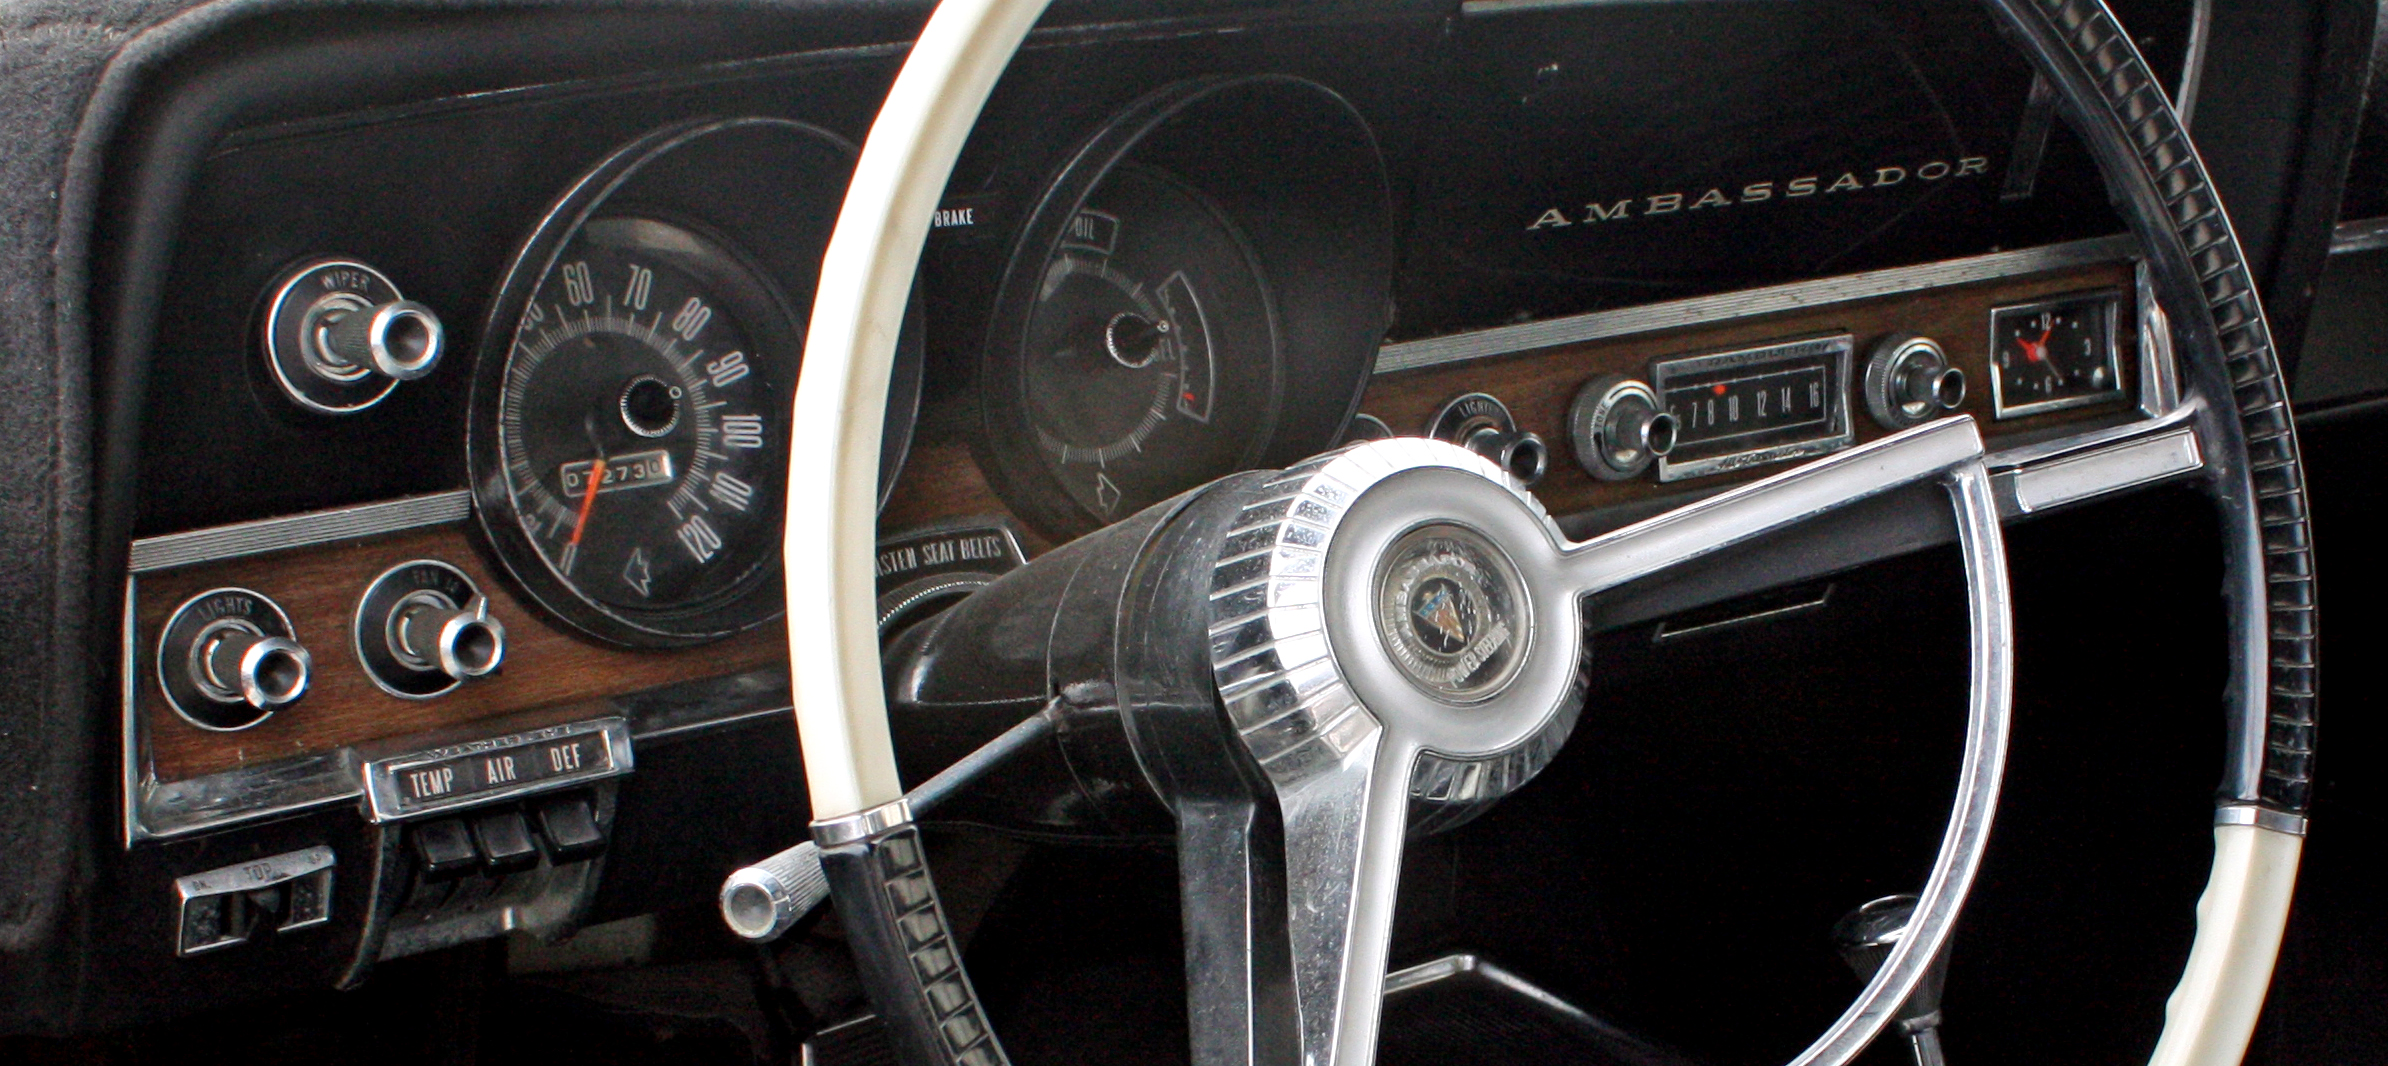 1965 Rambler Ambassador 990 Cabriolet (4 sur 6) / Flickr- Photo...